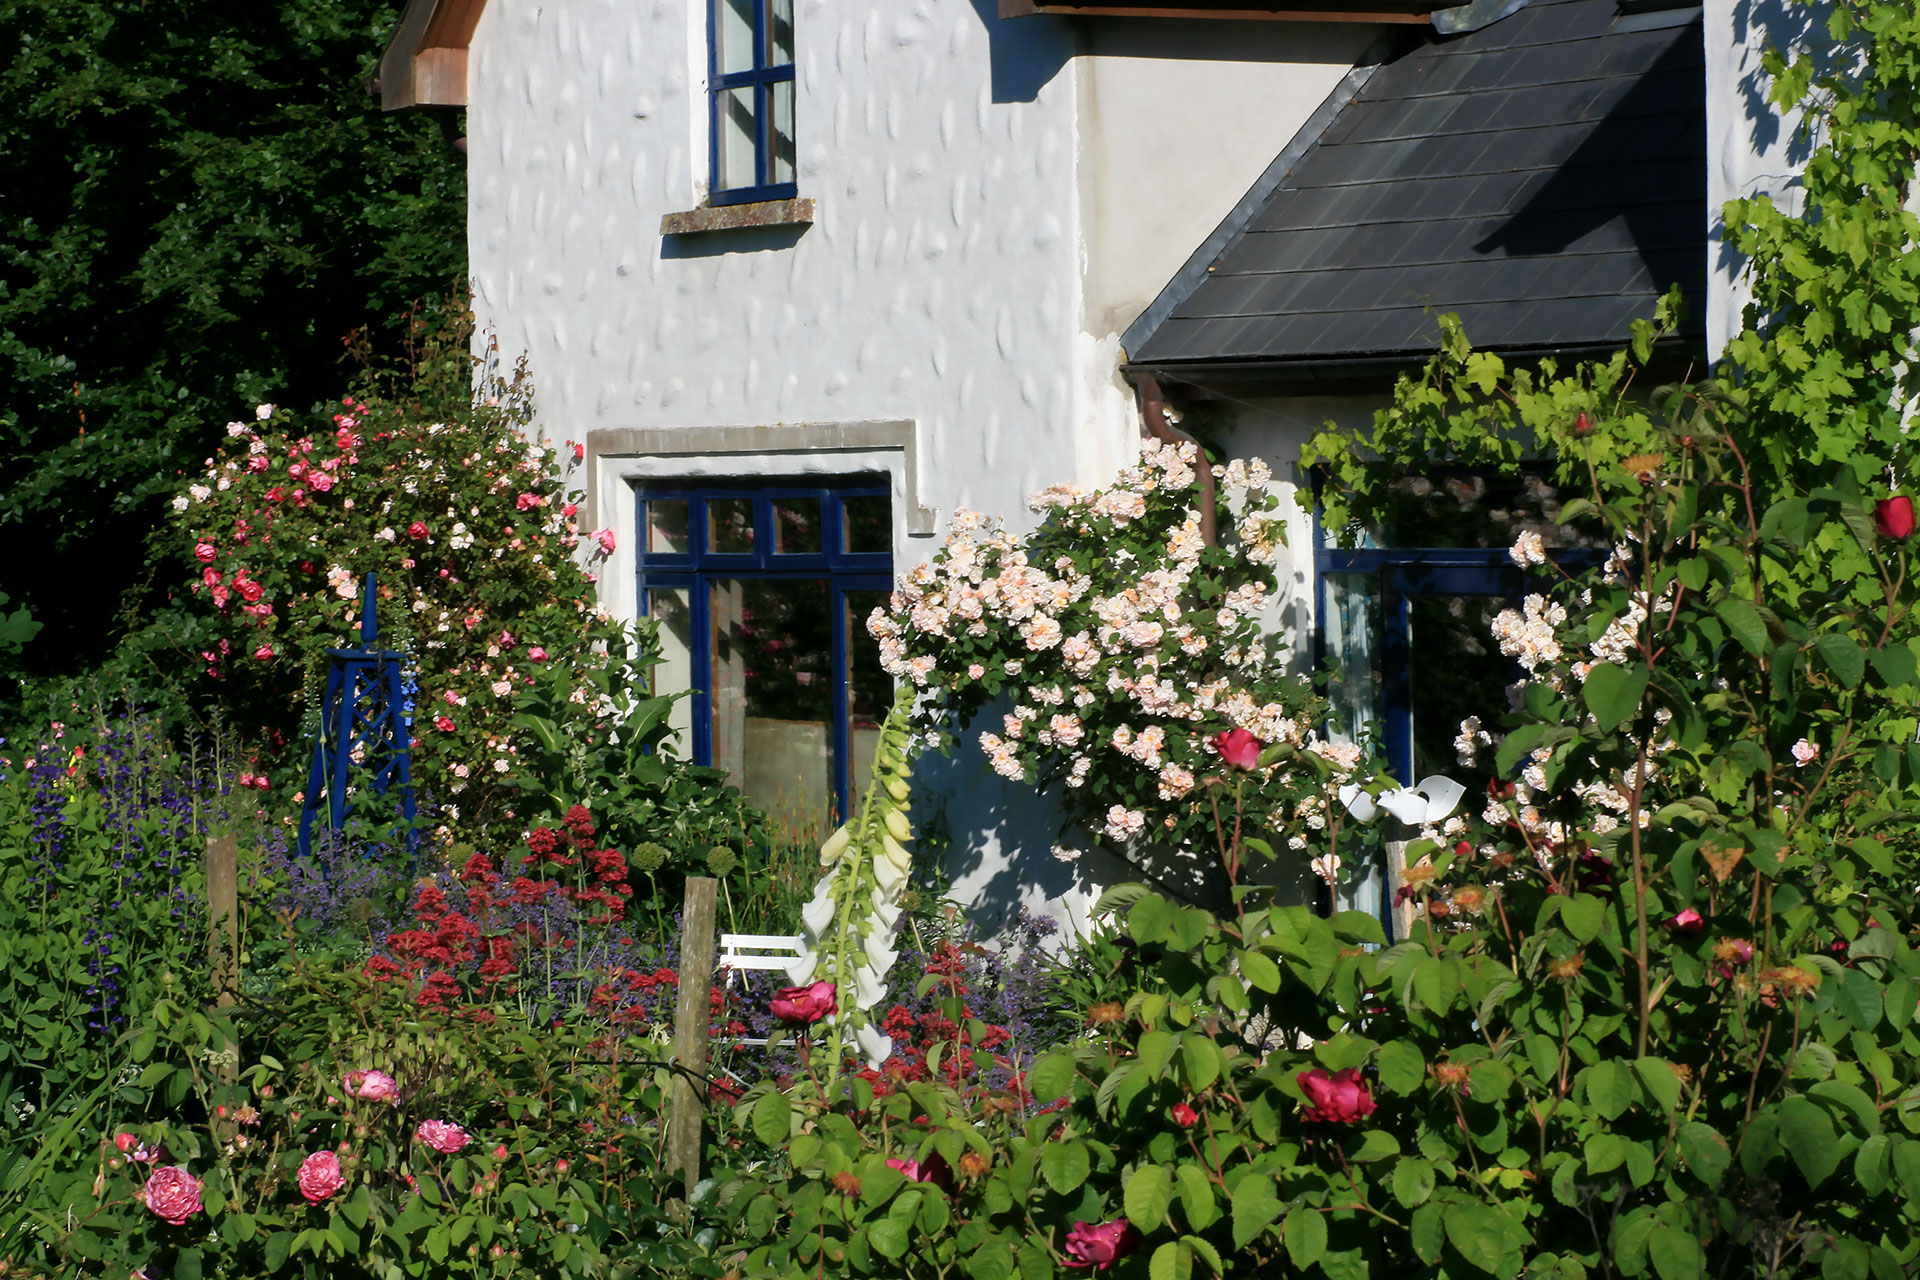 The garden in bloom, at Dunmore Country School